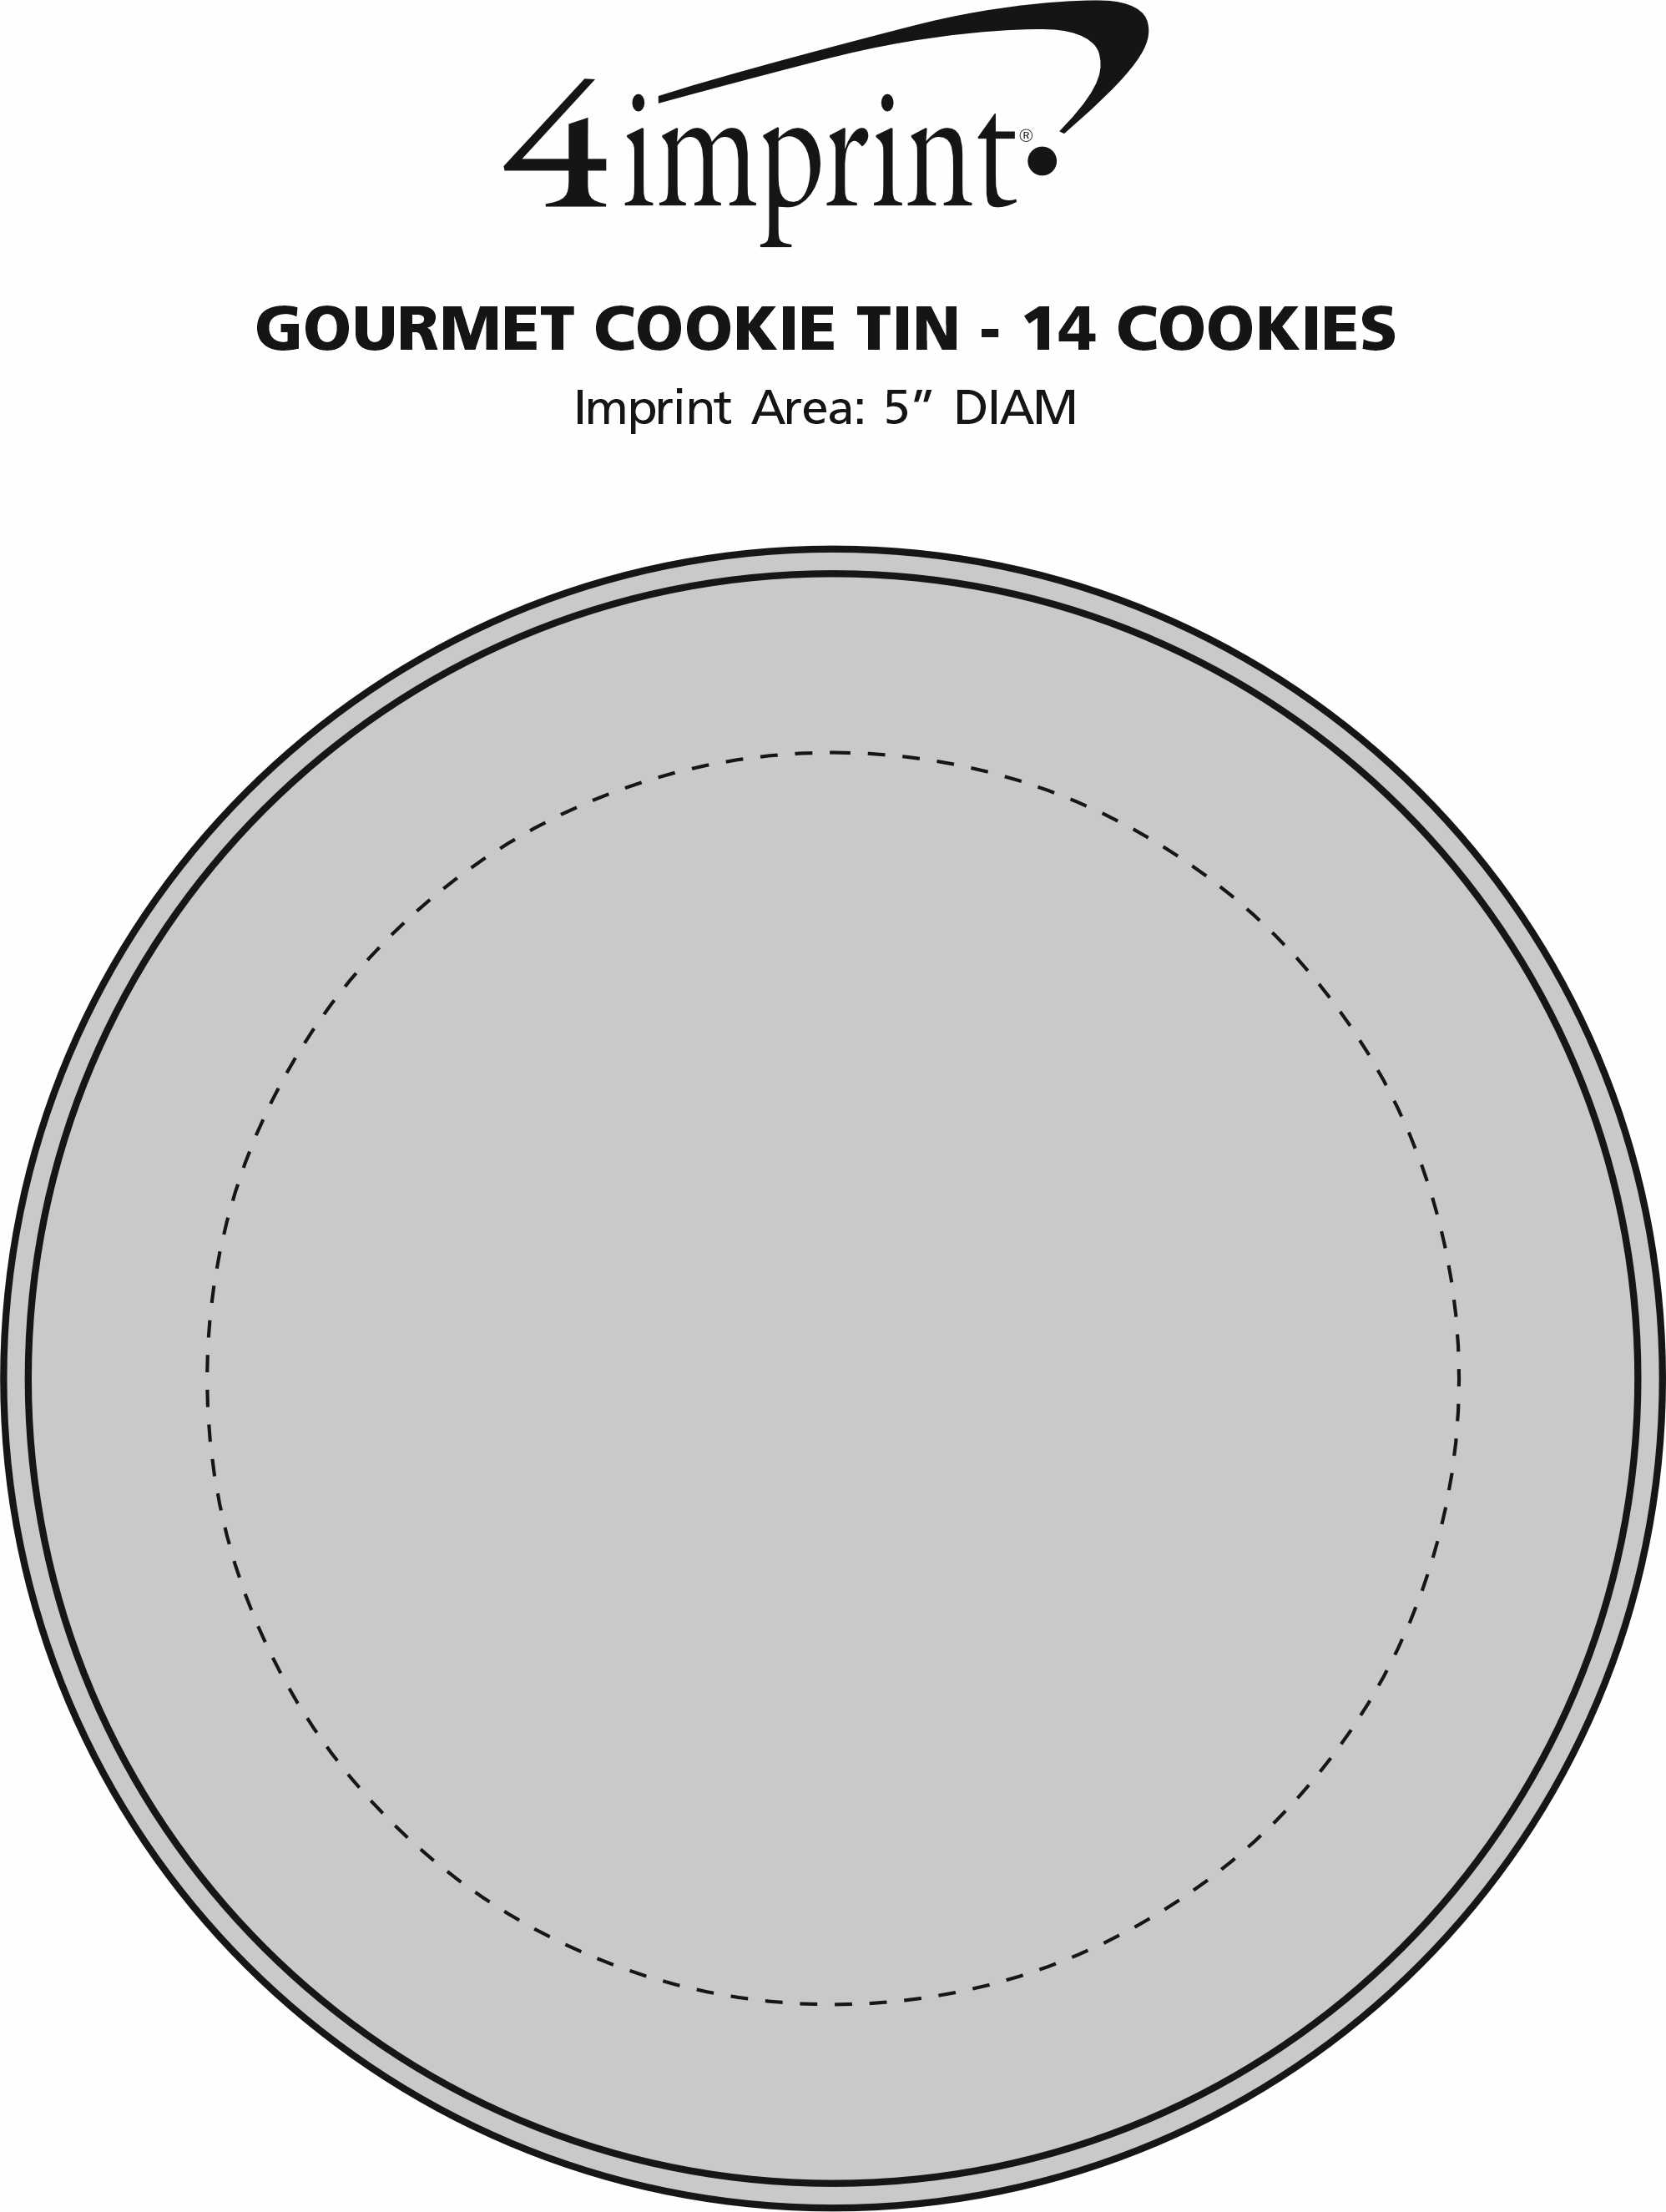 Imprint Area of Gourmet Cookie Tin - 14 Cookies